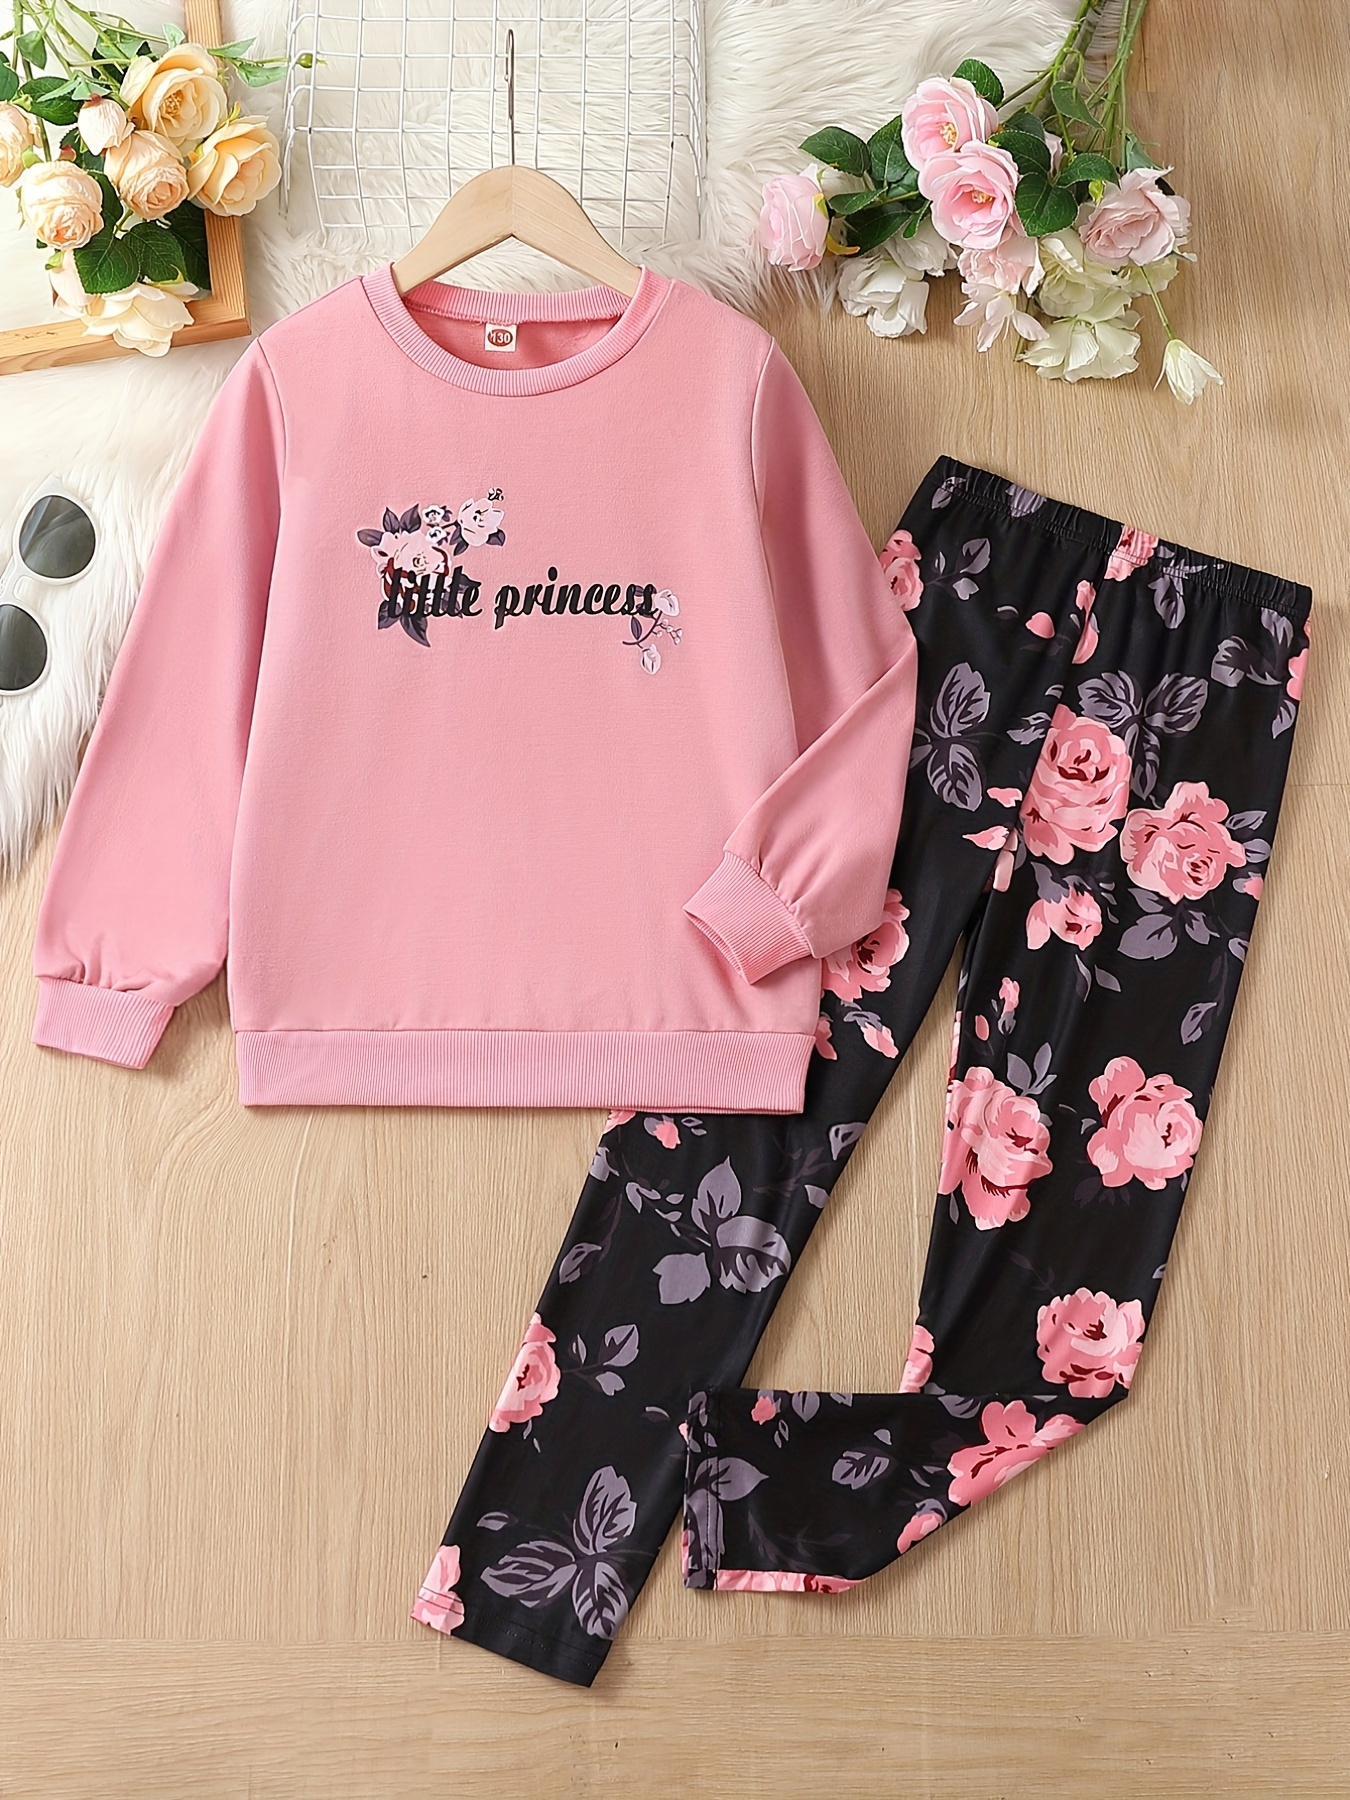 GORGEOUS!! Pink floral tee, sweatshirt, and leggings set